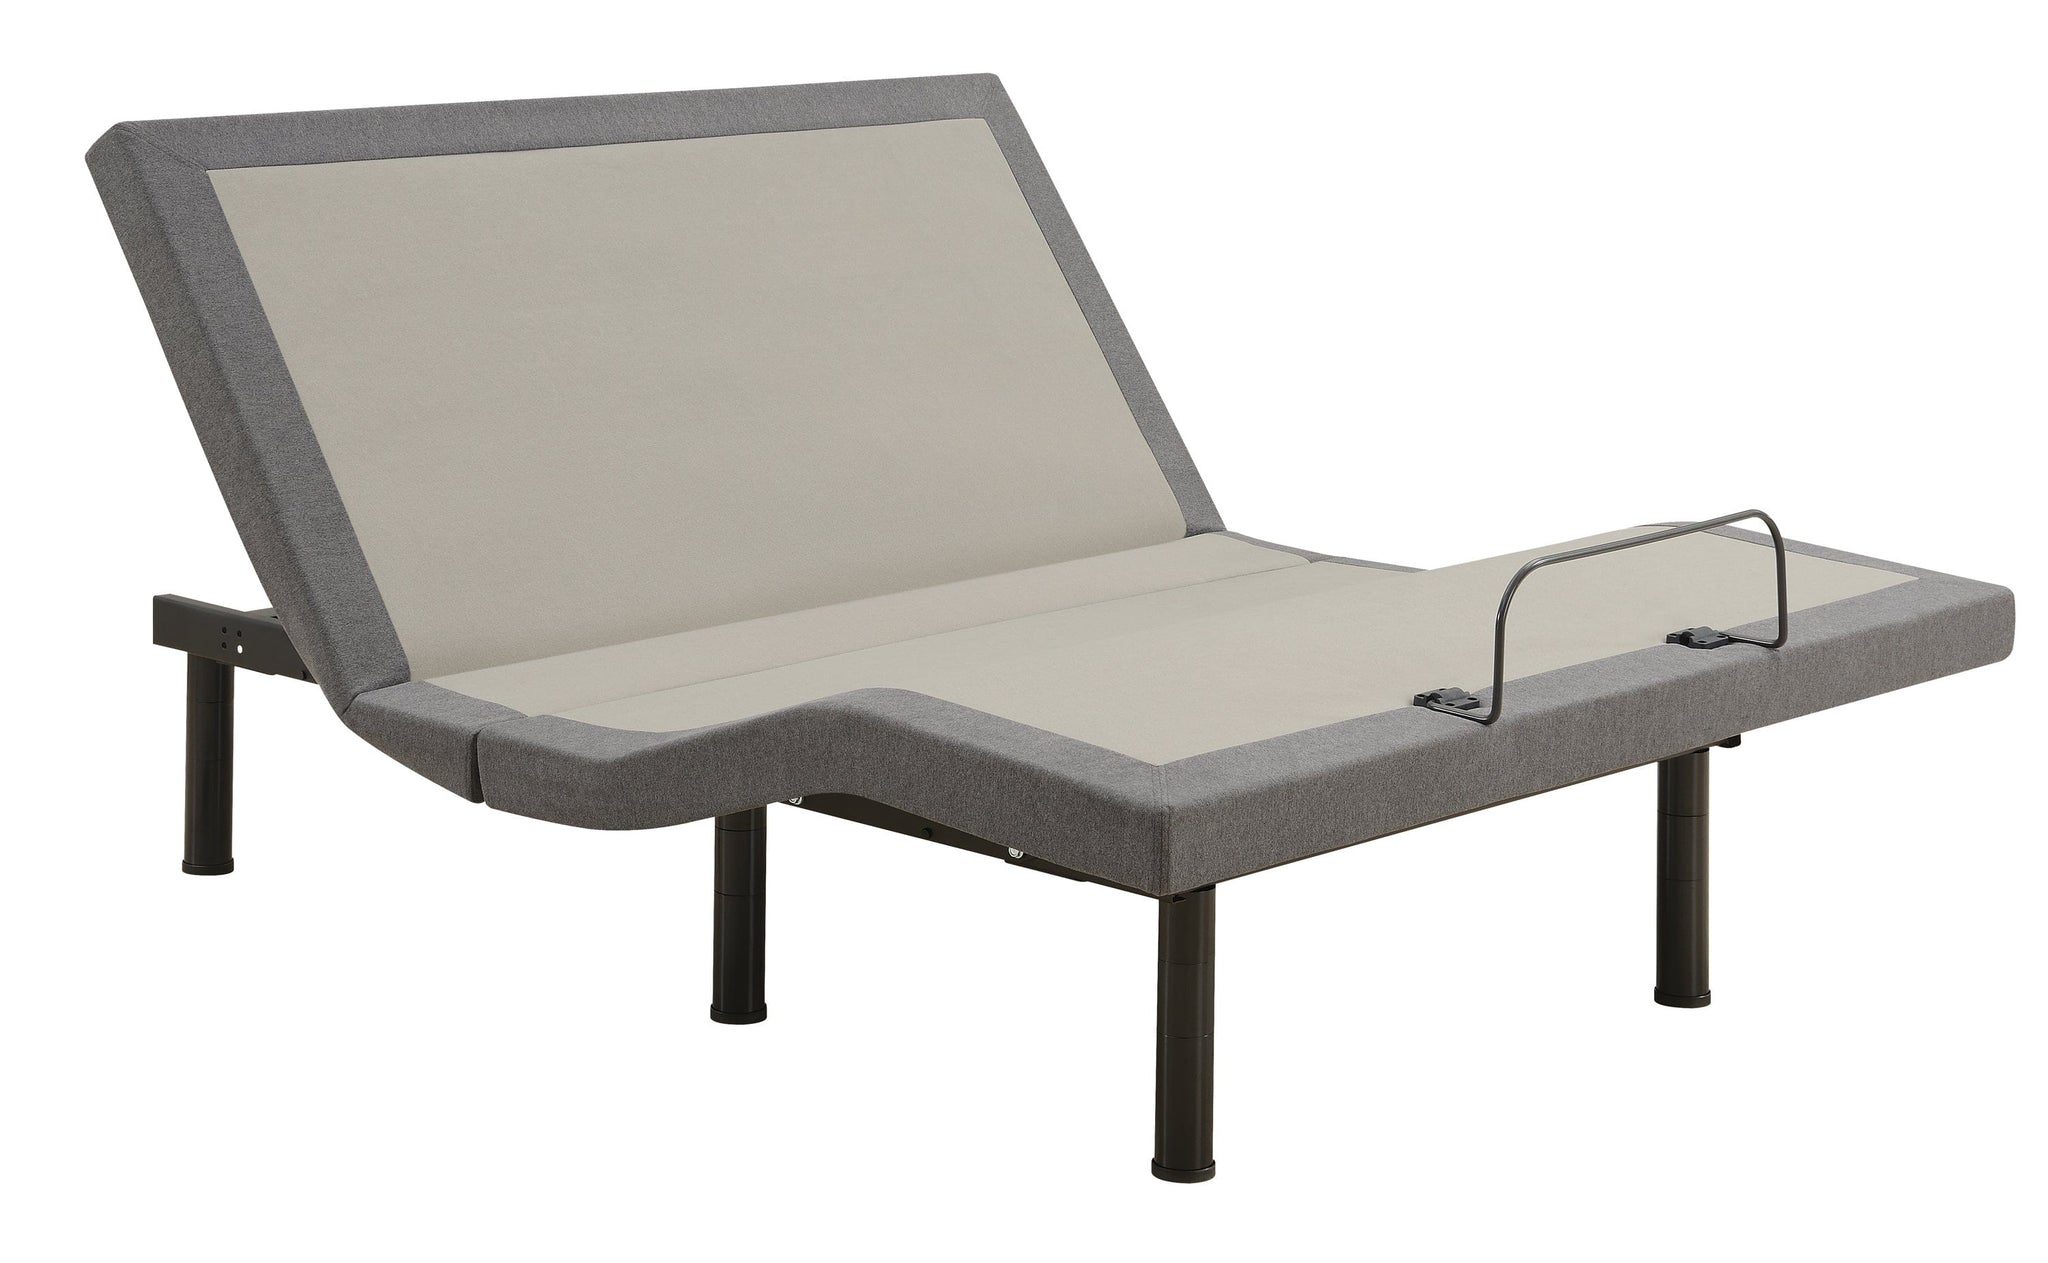 Negan Twin XL Adjustable Bed Base Grey And Black - 350132TL